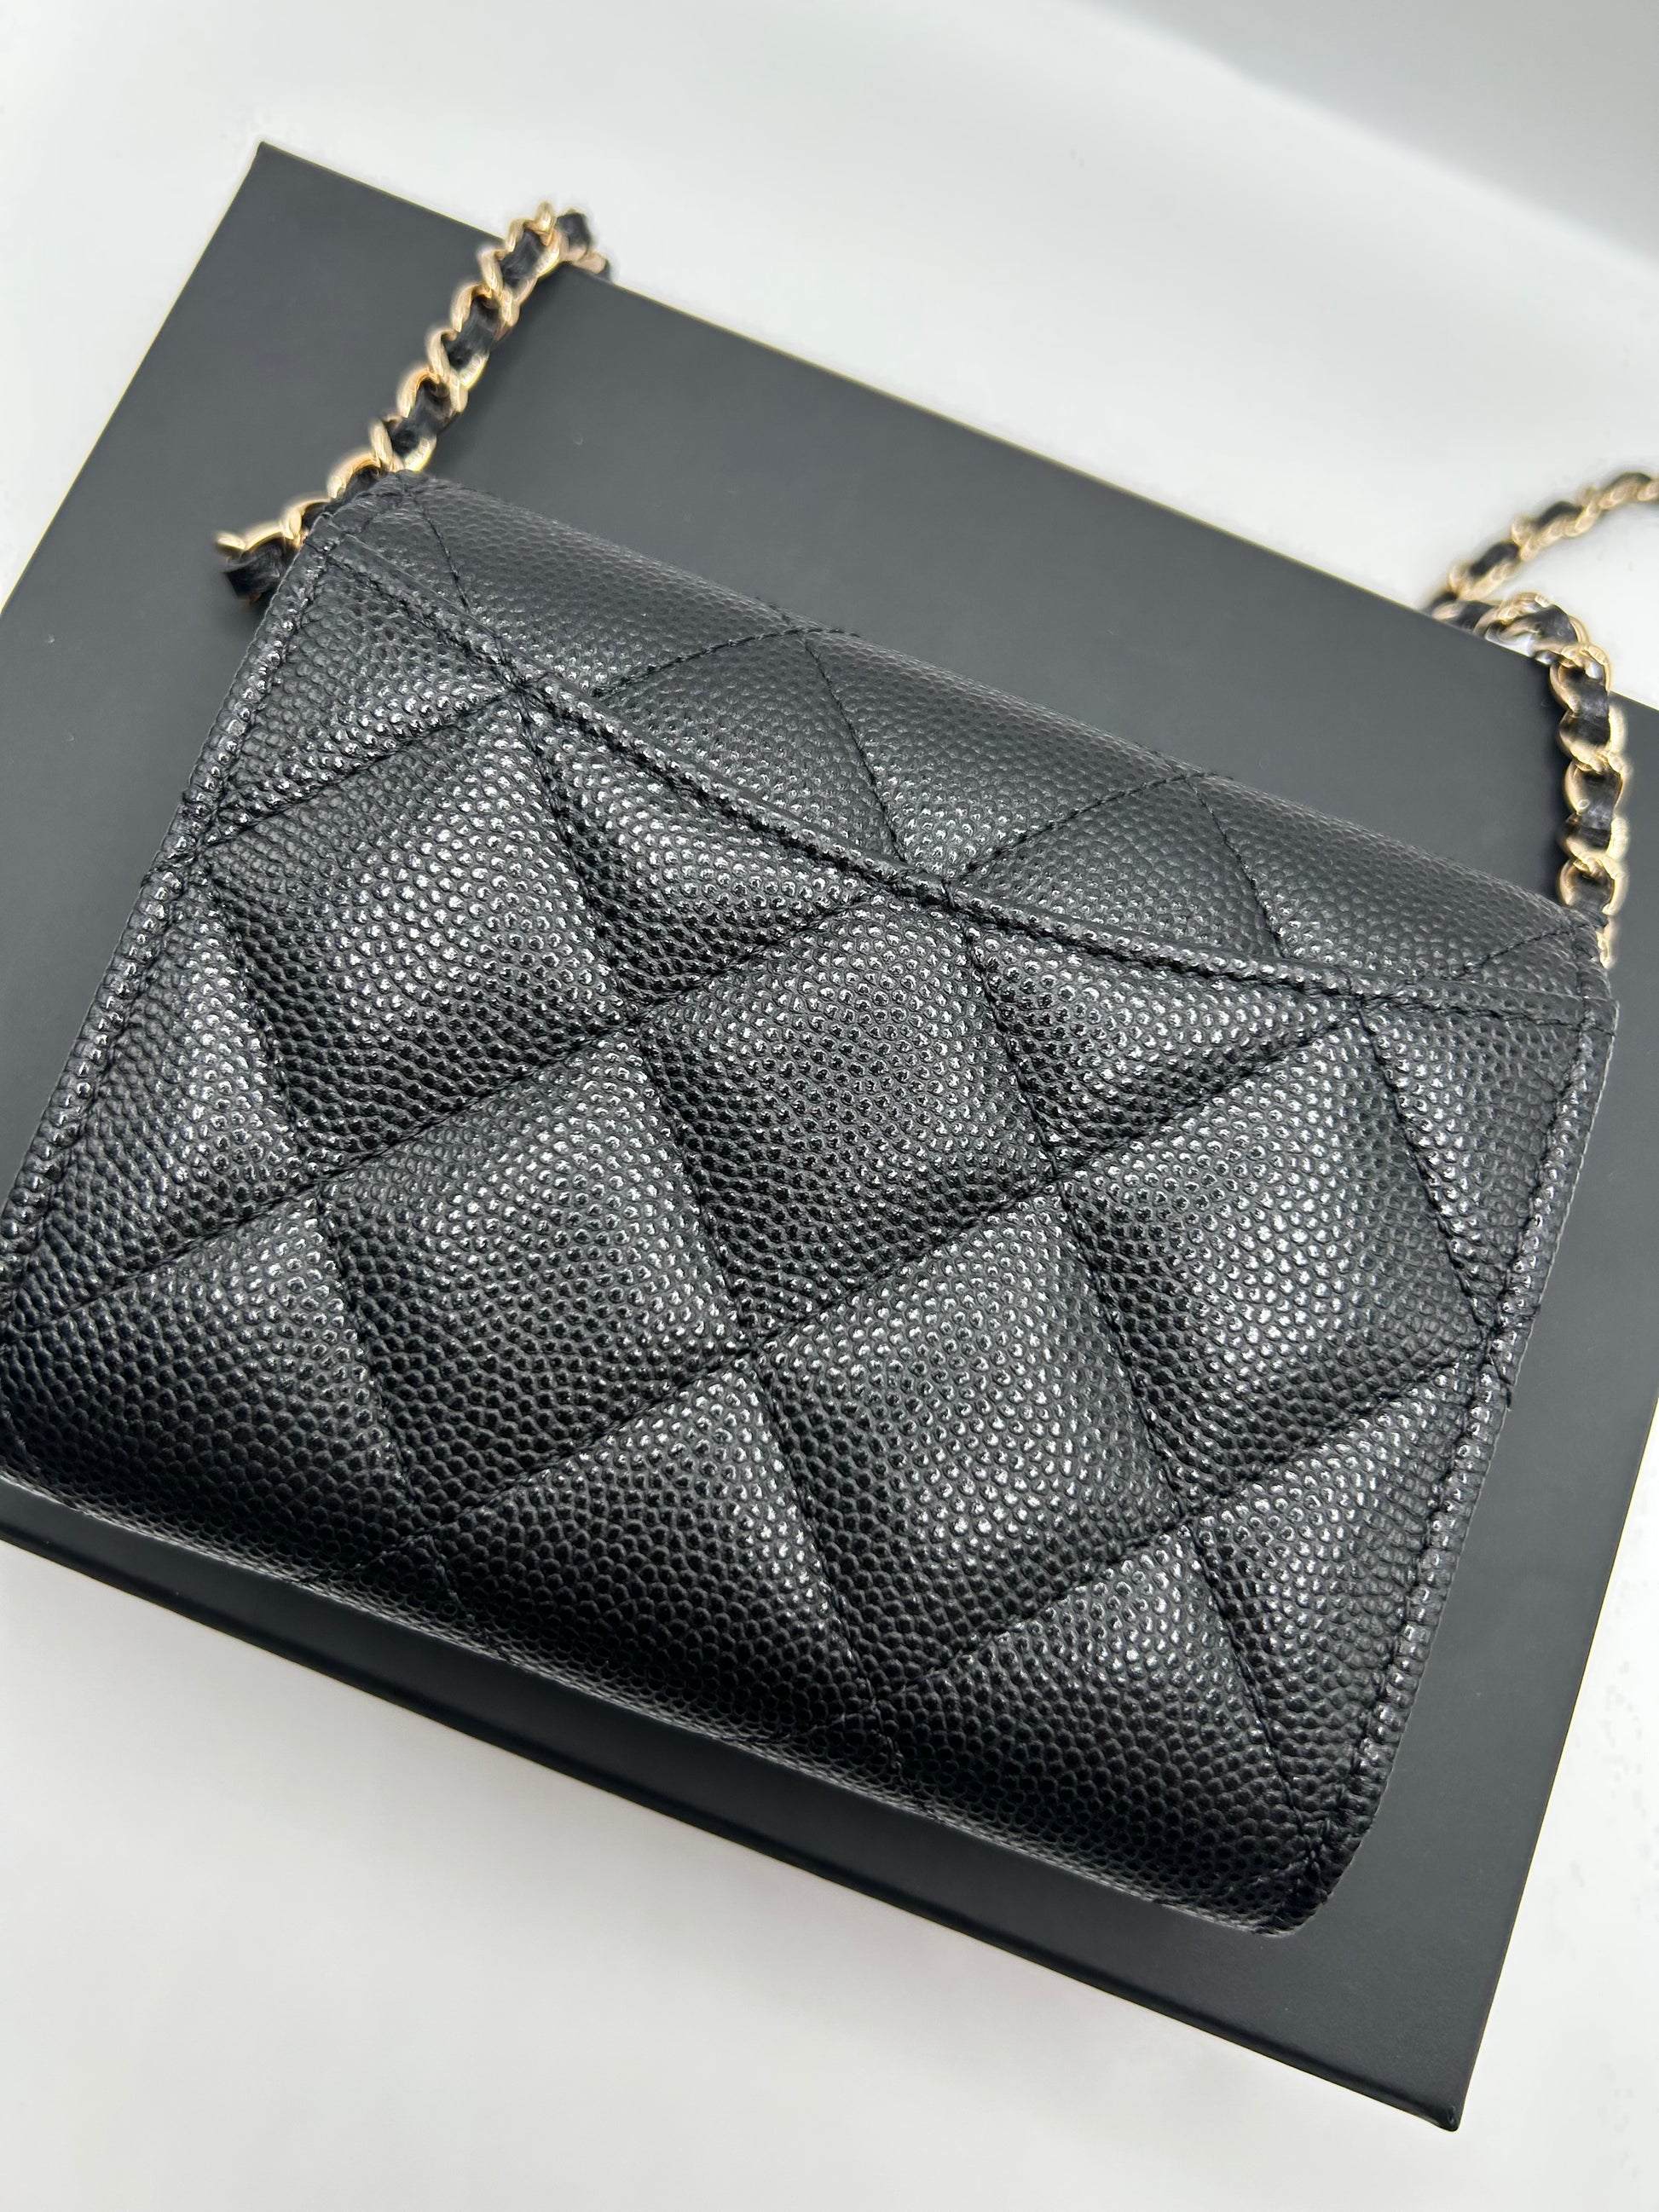 Chanel Woc Black Caviar Quilted Mini Wallet on Chain Crossbody w/ Box & Card